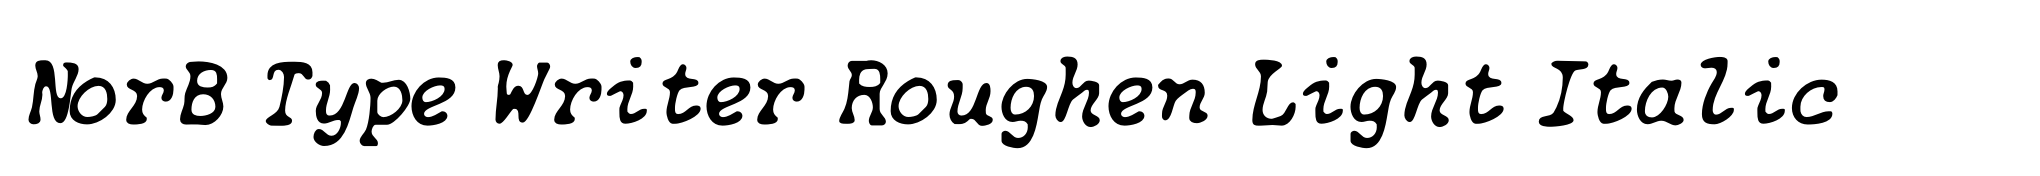 NorB Type Writer Roughen Light Italic image